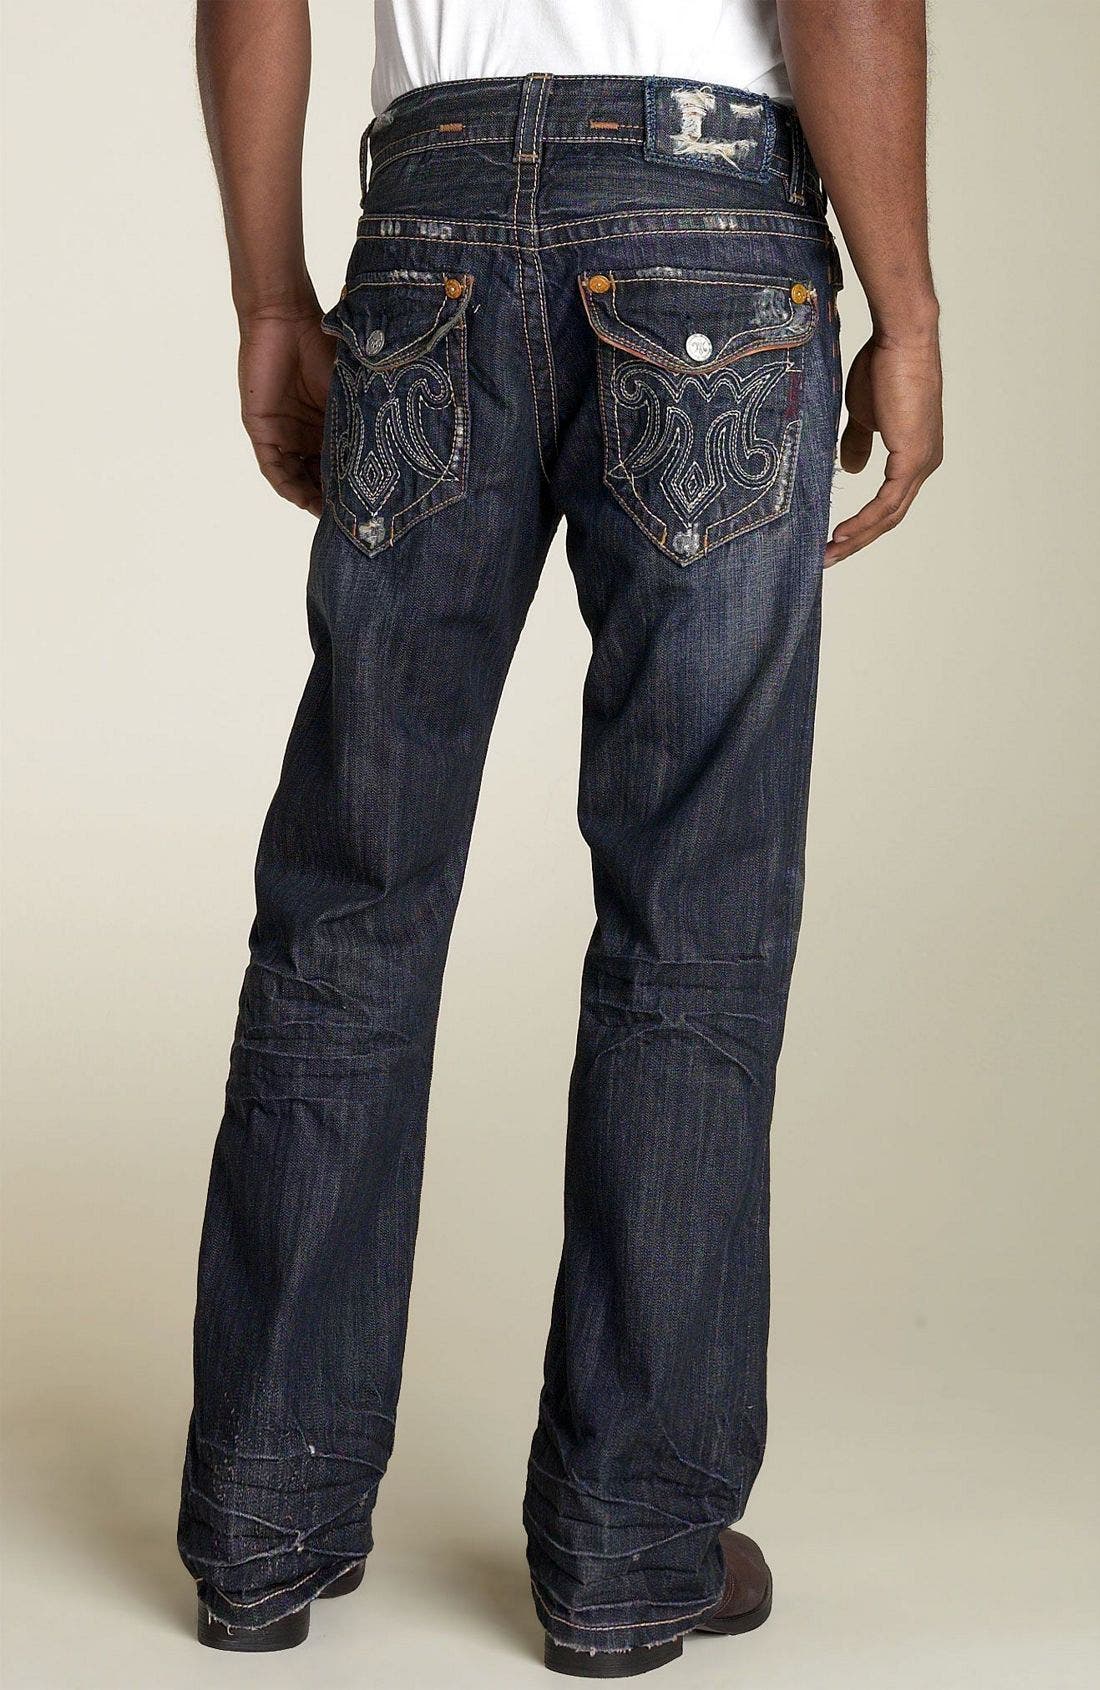 mek denim jeans new